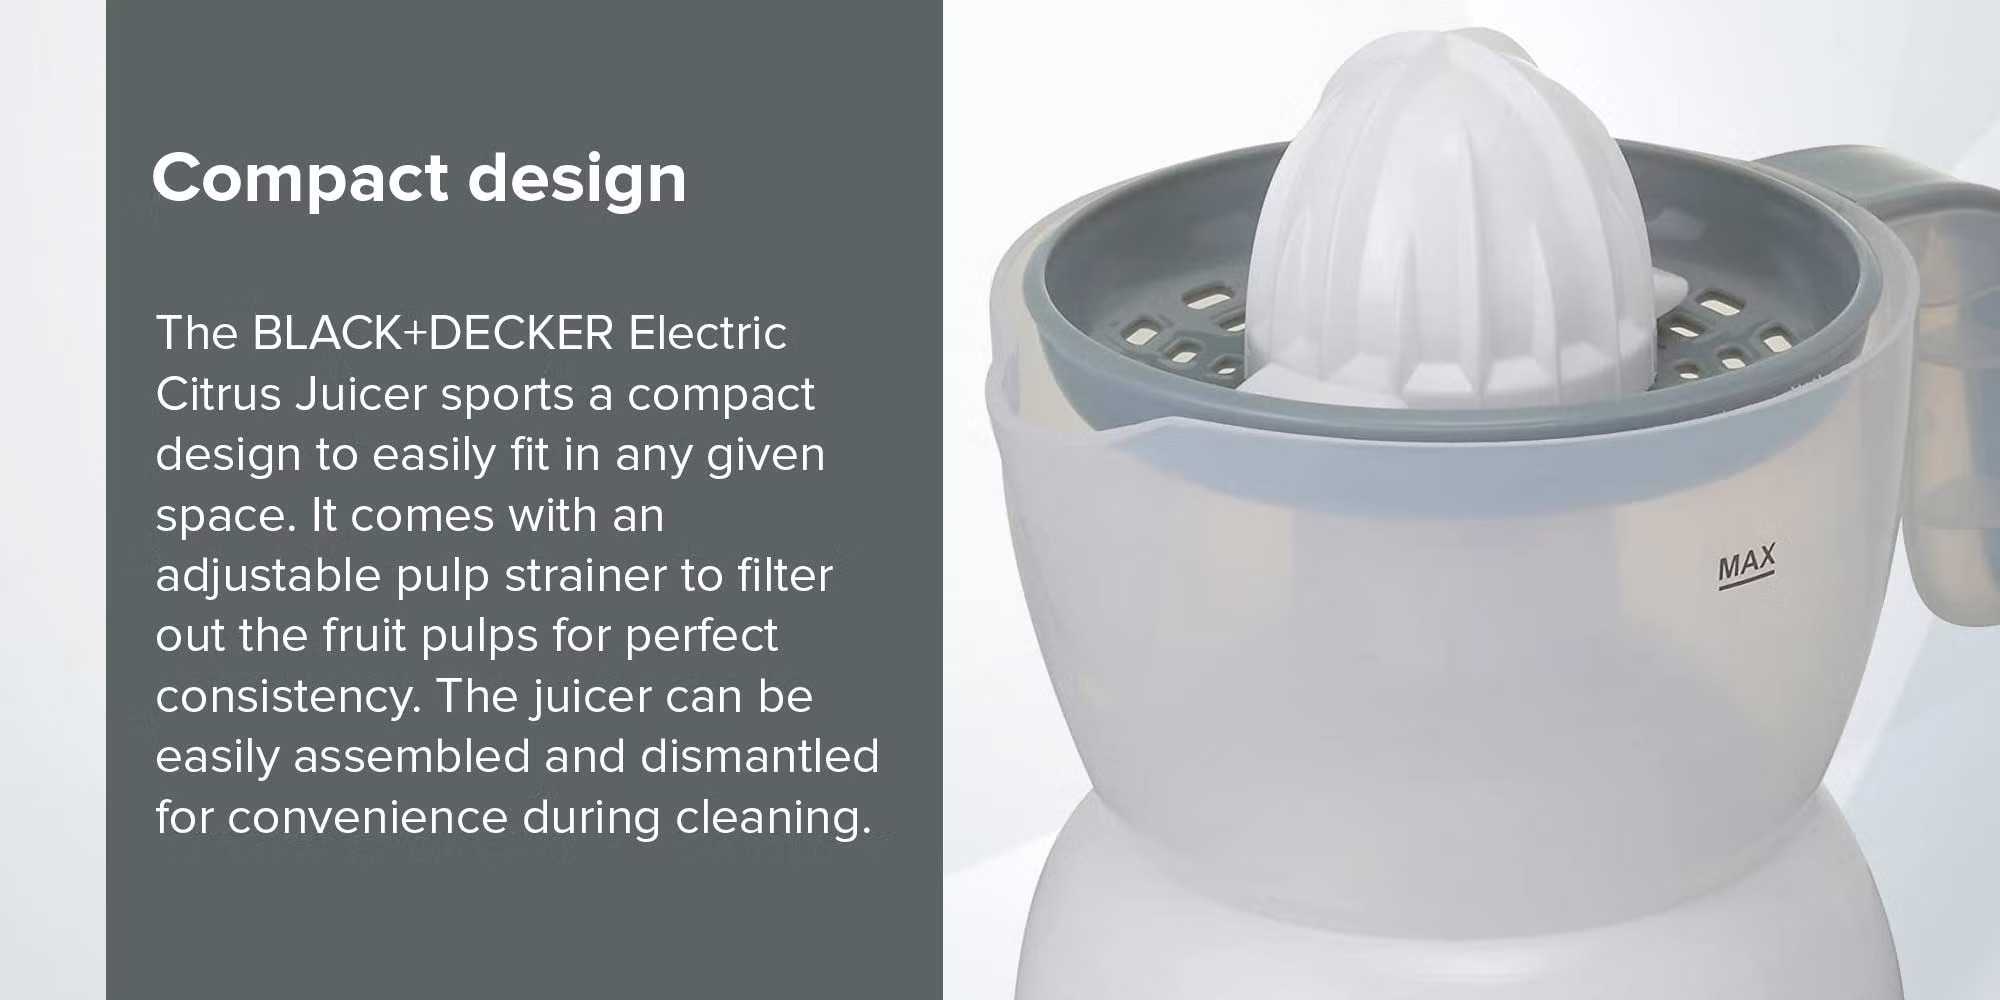 Black+Decker CJ200-B5 | Electric Citrus Juicer 